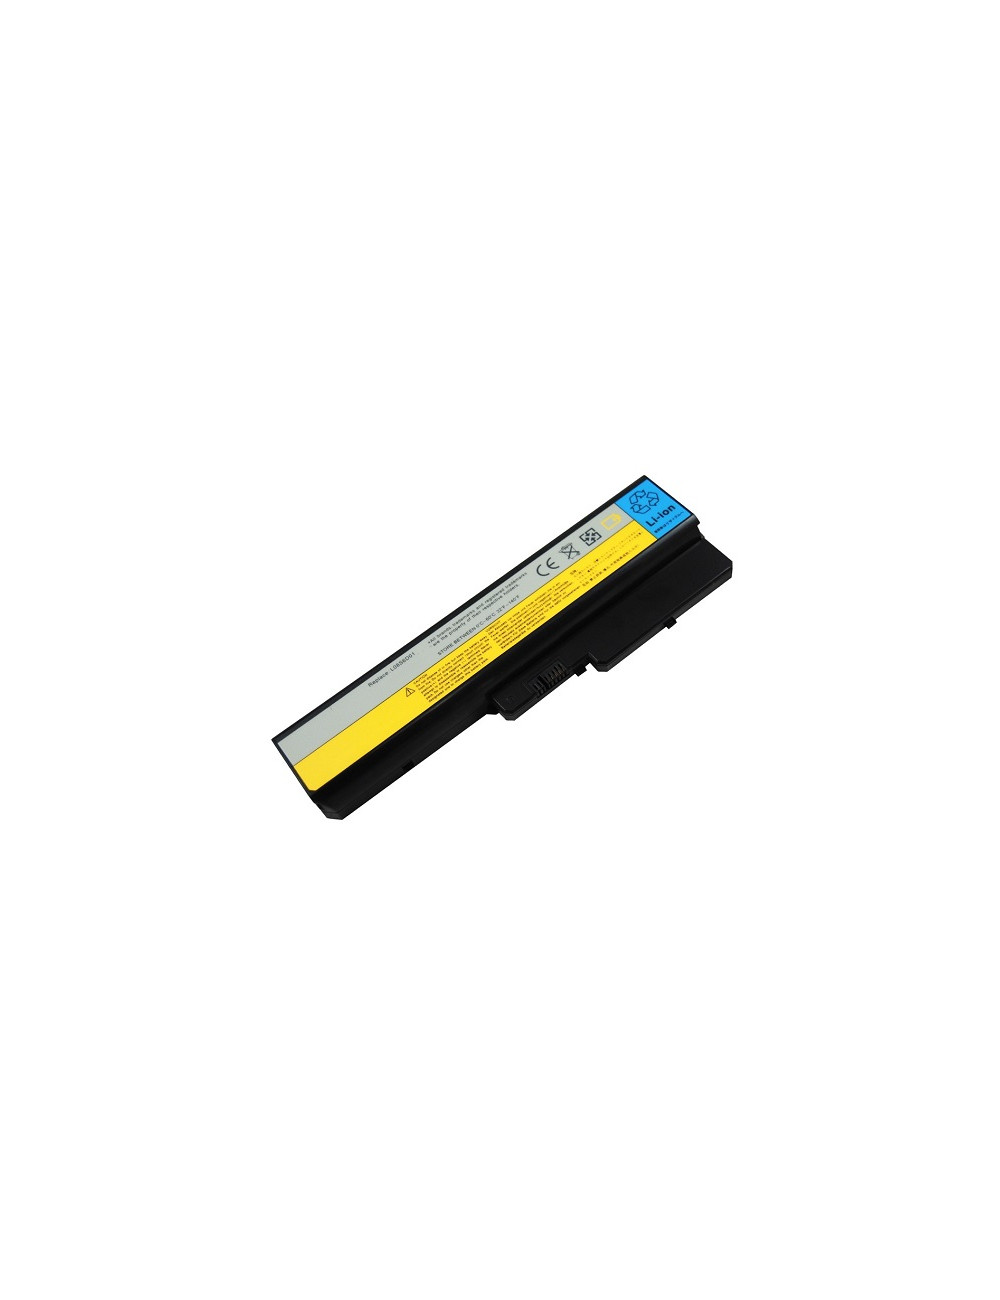 Notebook battery, Extra Digital Advanced, LENOVO L08O6D01, 5200mAh